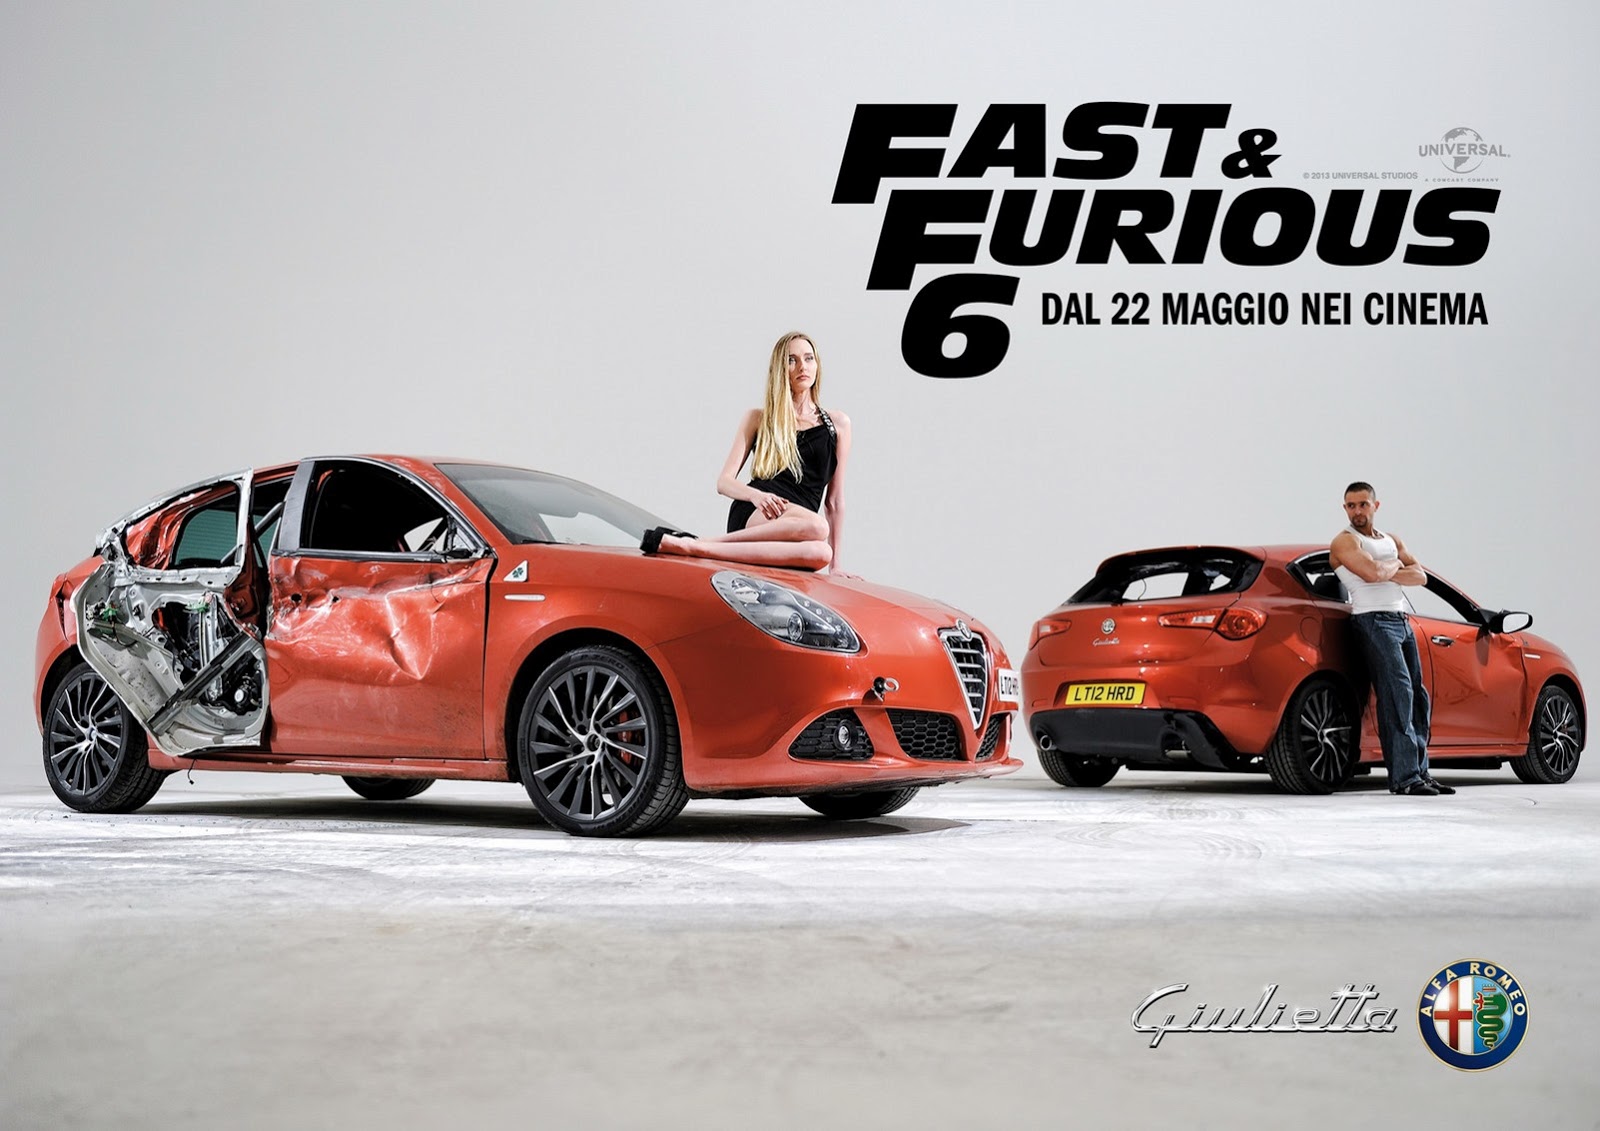 Alfa Giullietta Fastand Furious 42